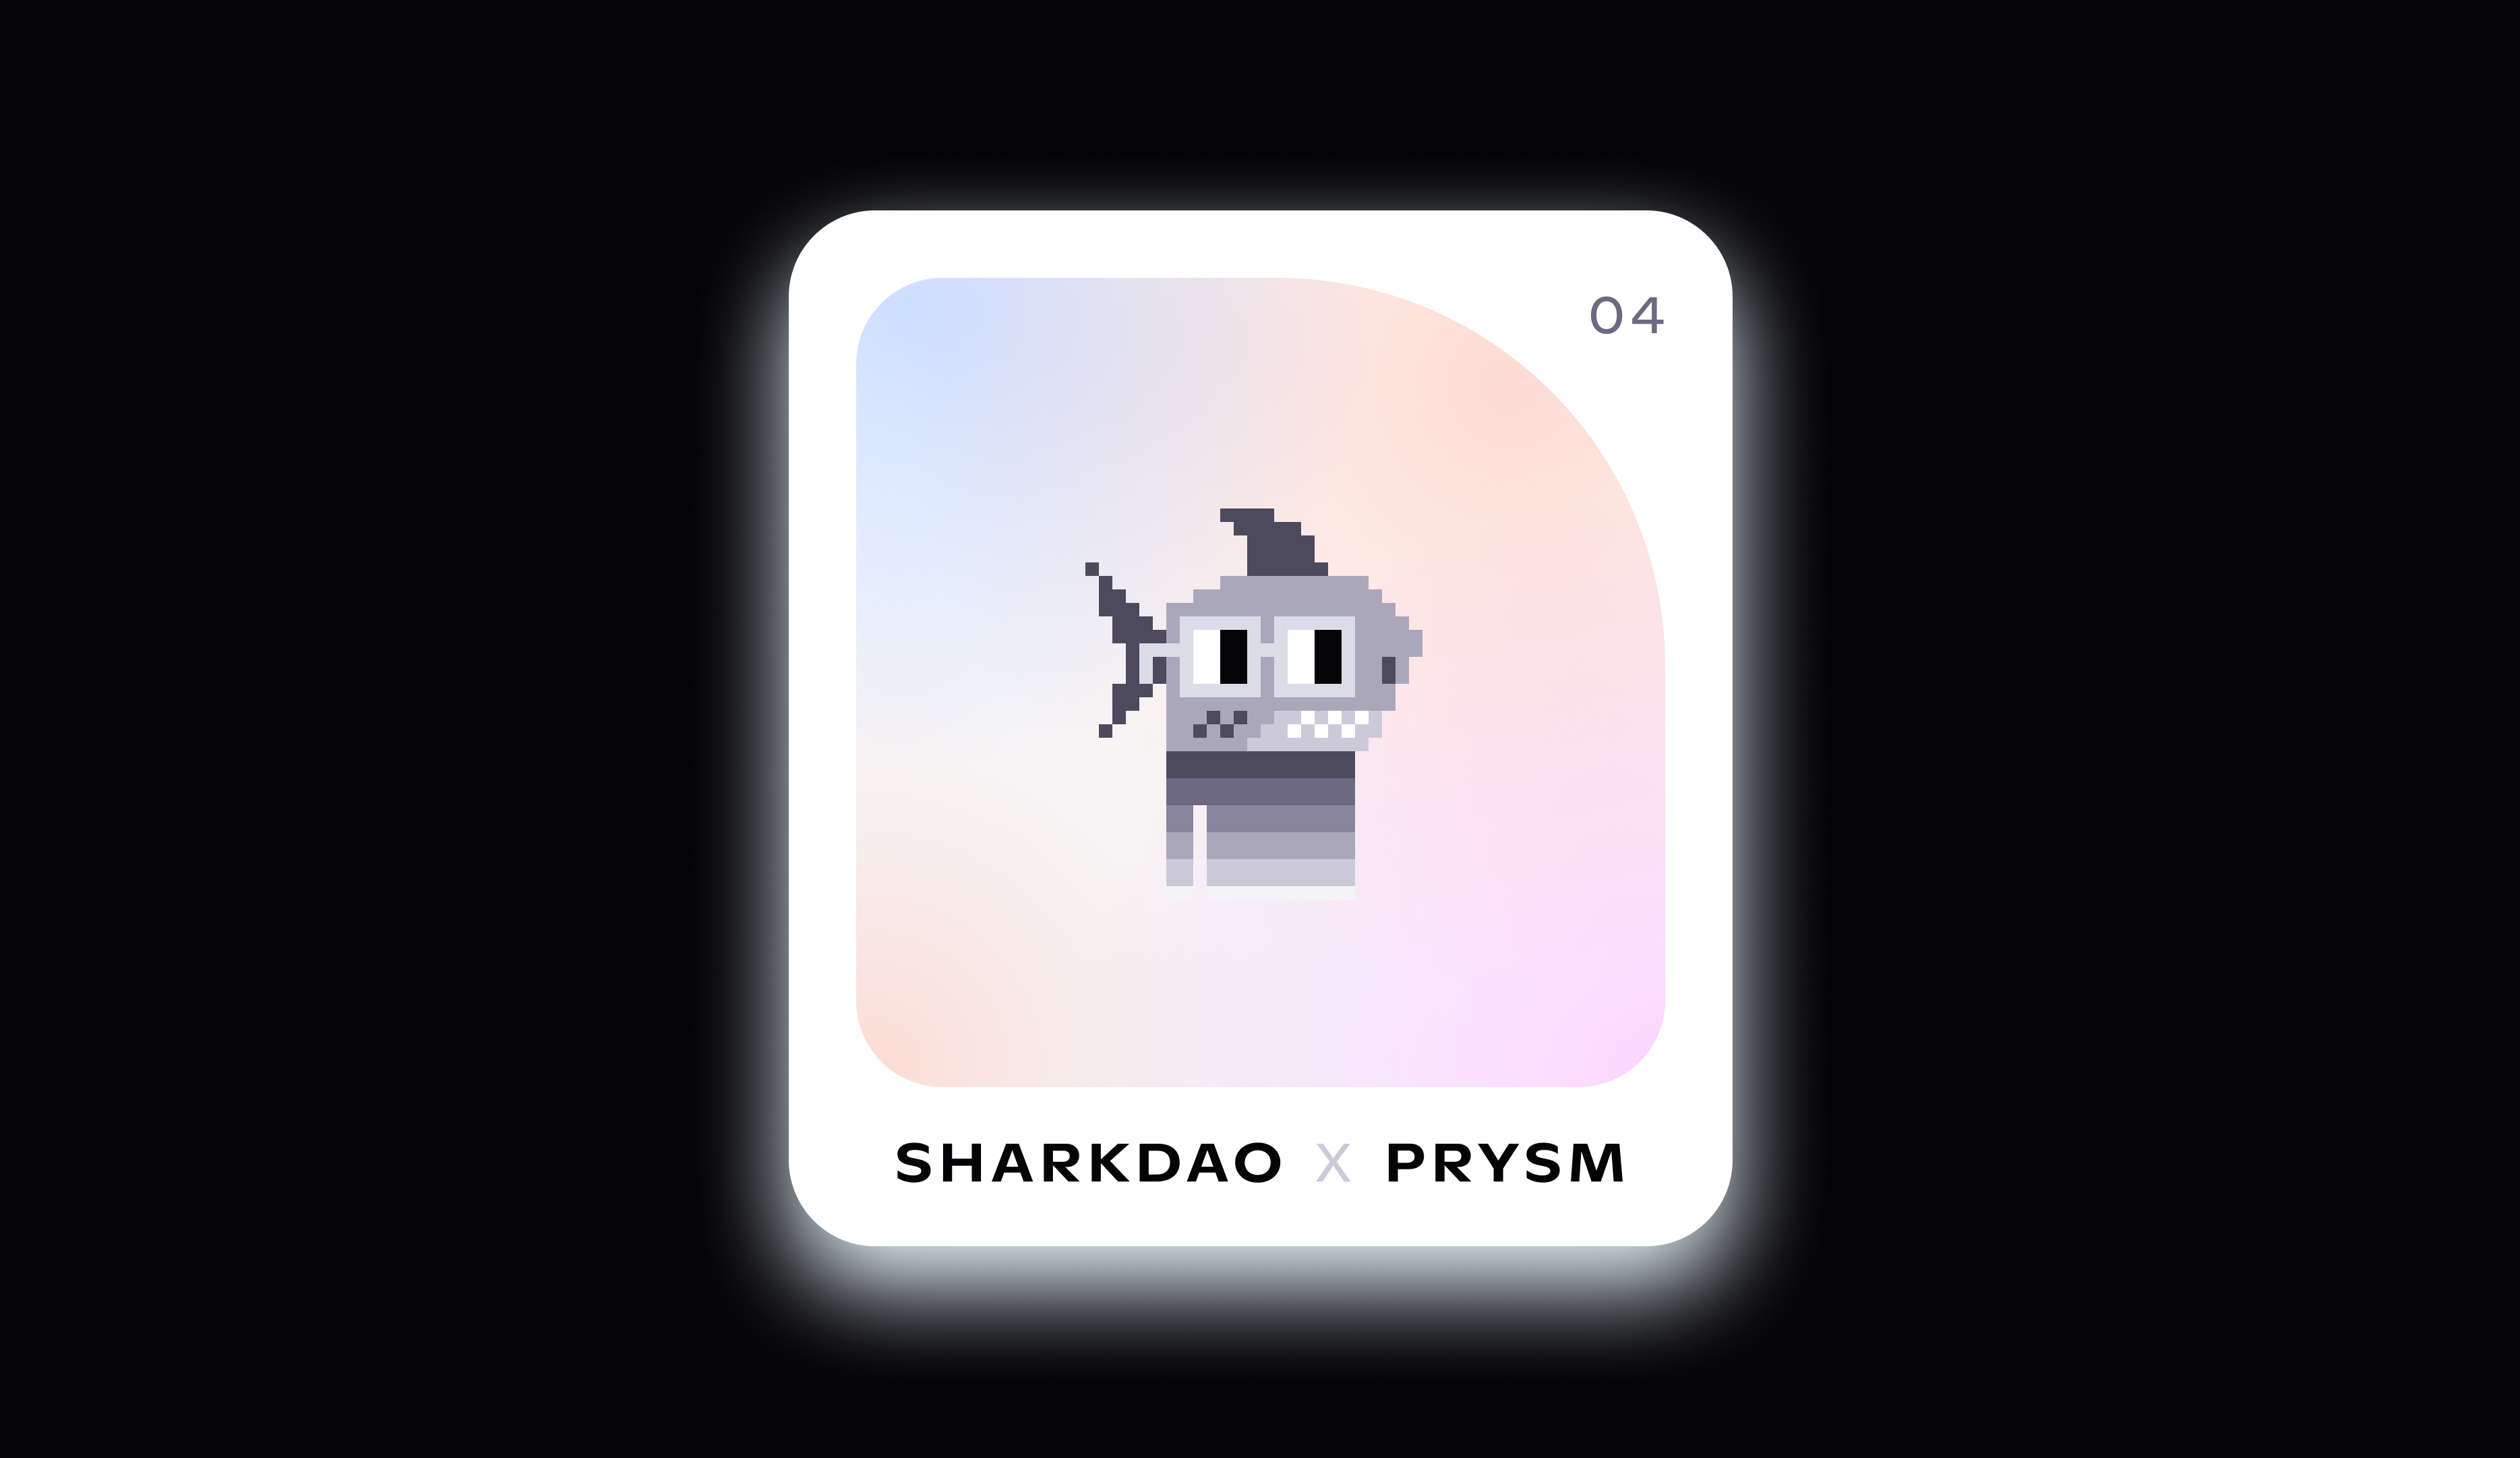 Visit prysm.xyz/access to view custom SharkDAO 3D NFT art and mint.